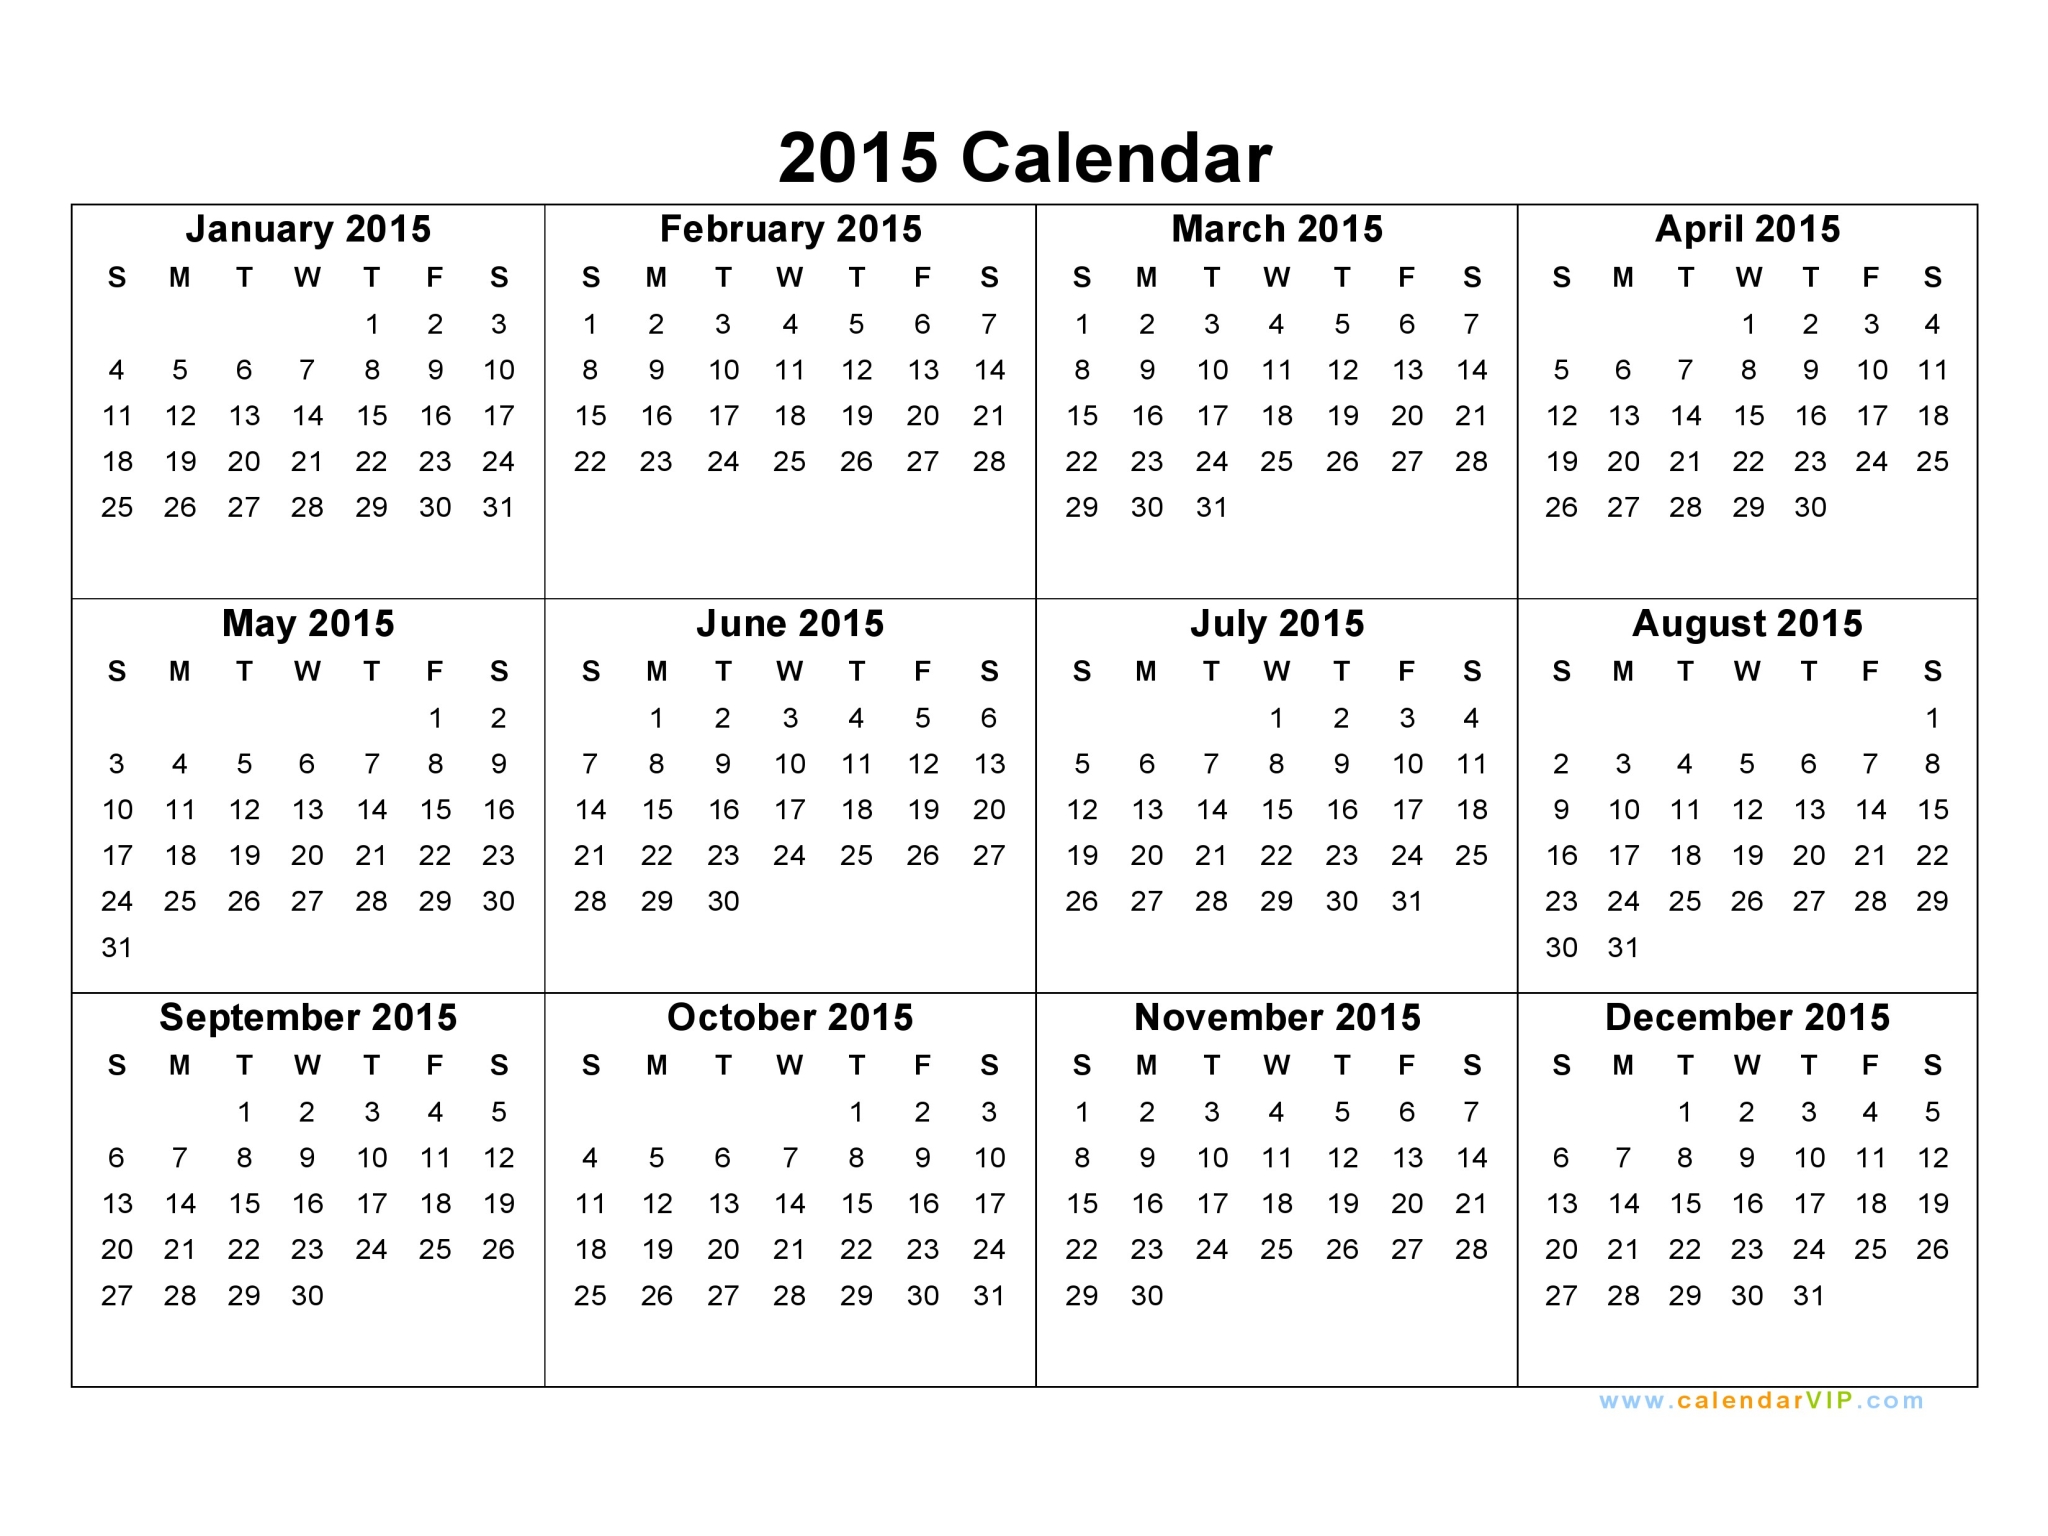 Yearly Calendar 2015 | 2017 calendar with holidays